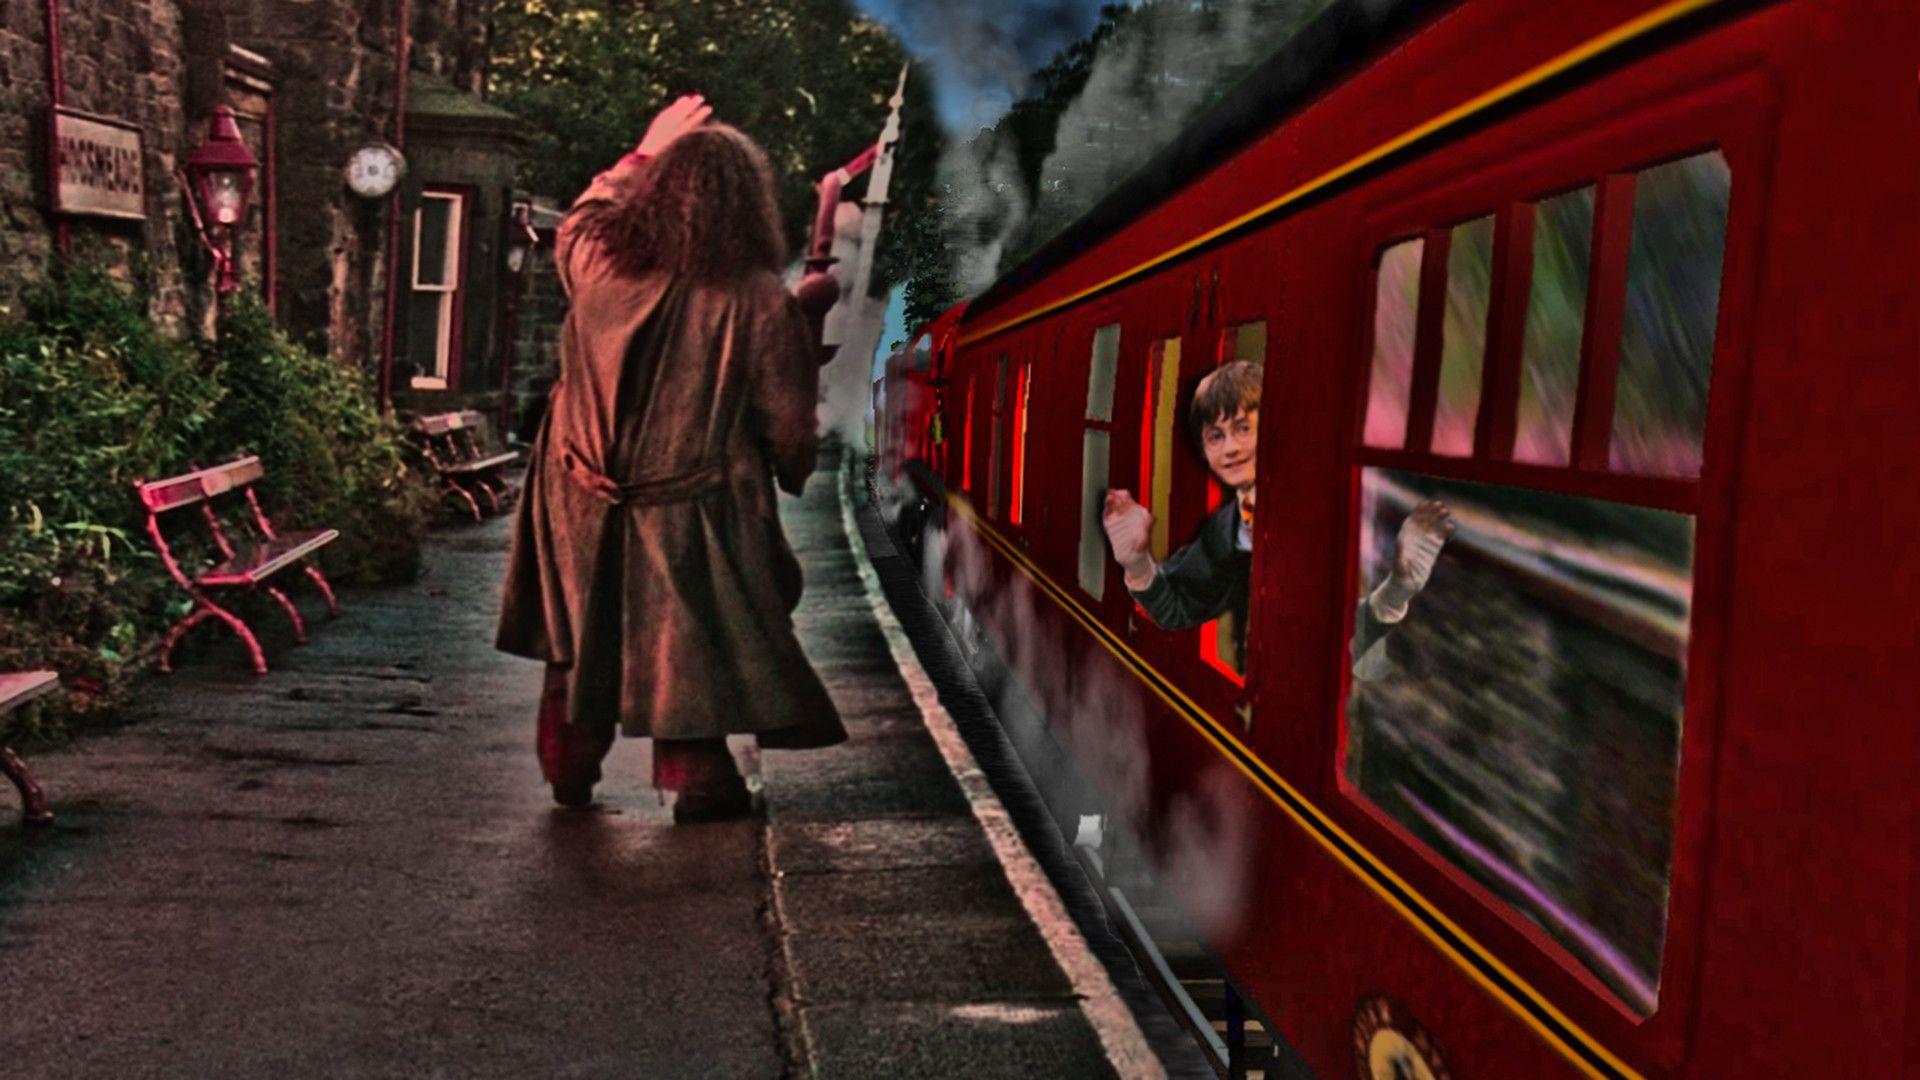 500+ Hogwarts Express Pictures [HD] | Download Free Images on Unsplash